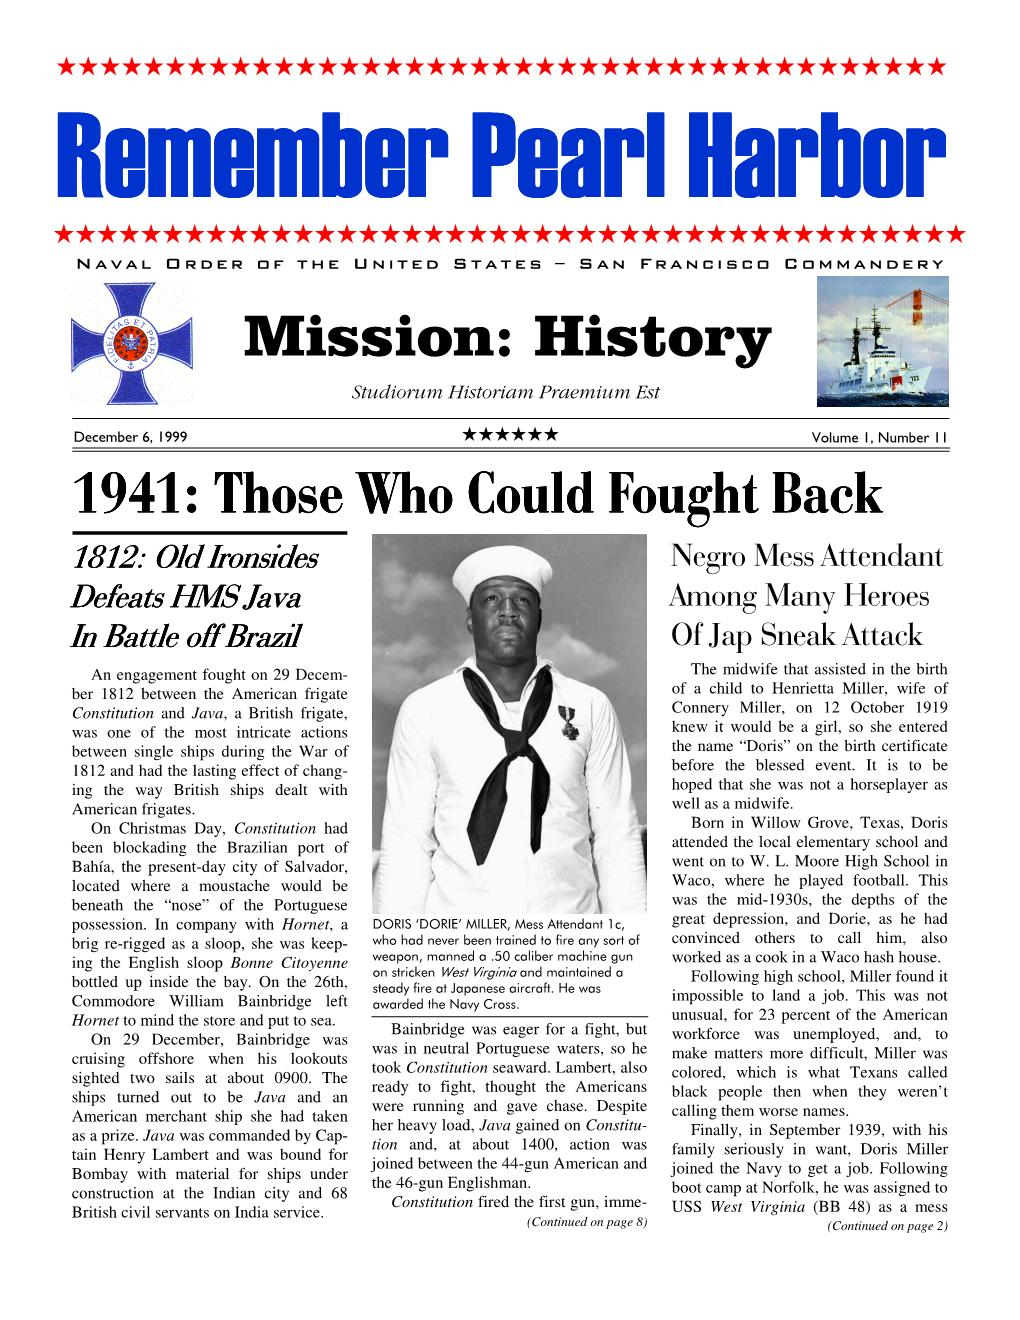 Mission: History 1941